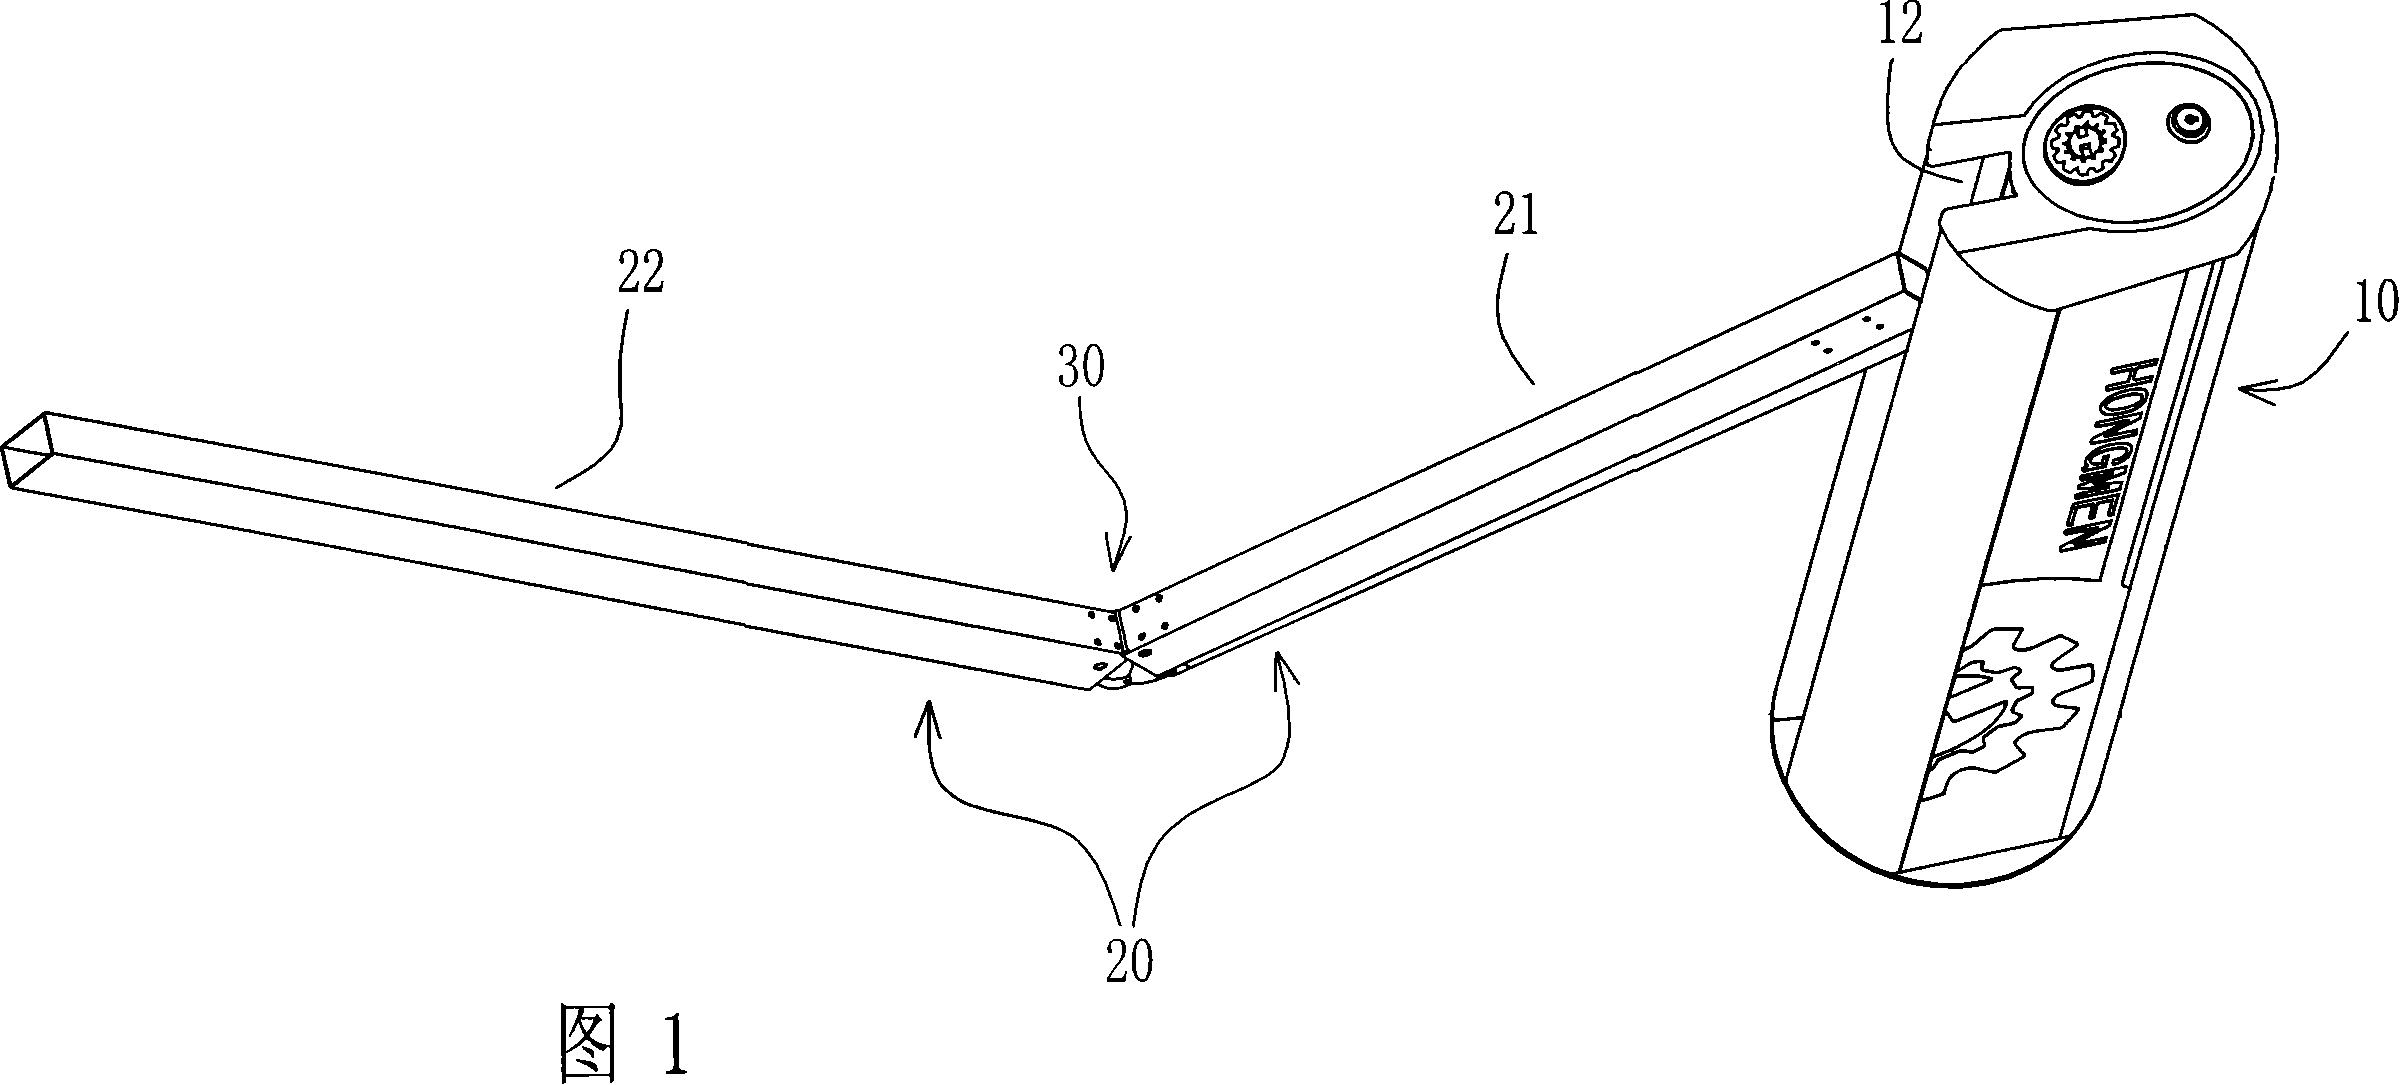 Arm spread type telescopic brake bar mechanism for road brake